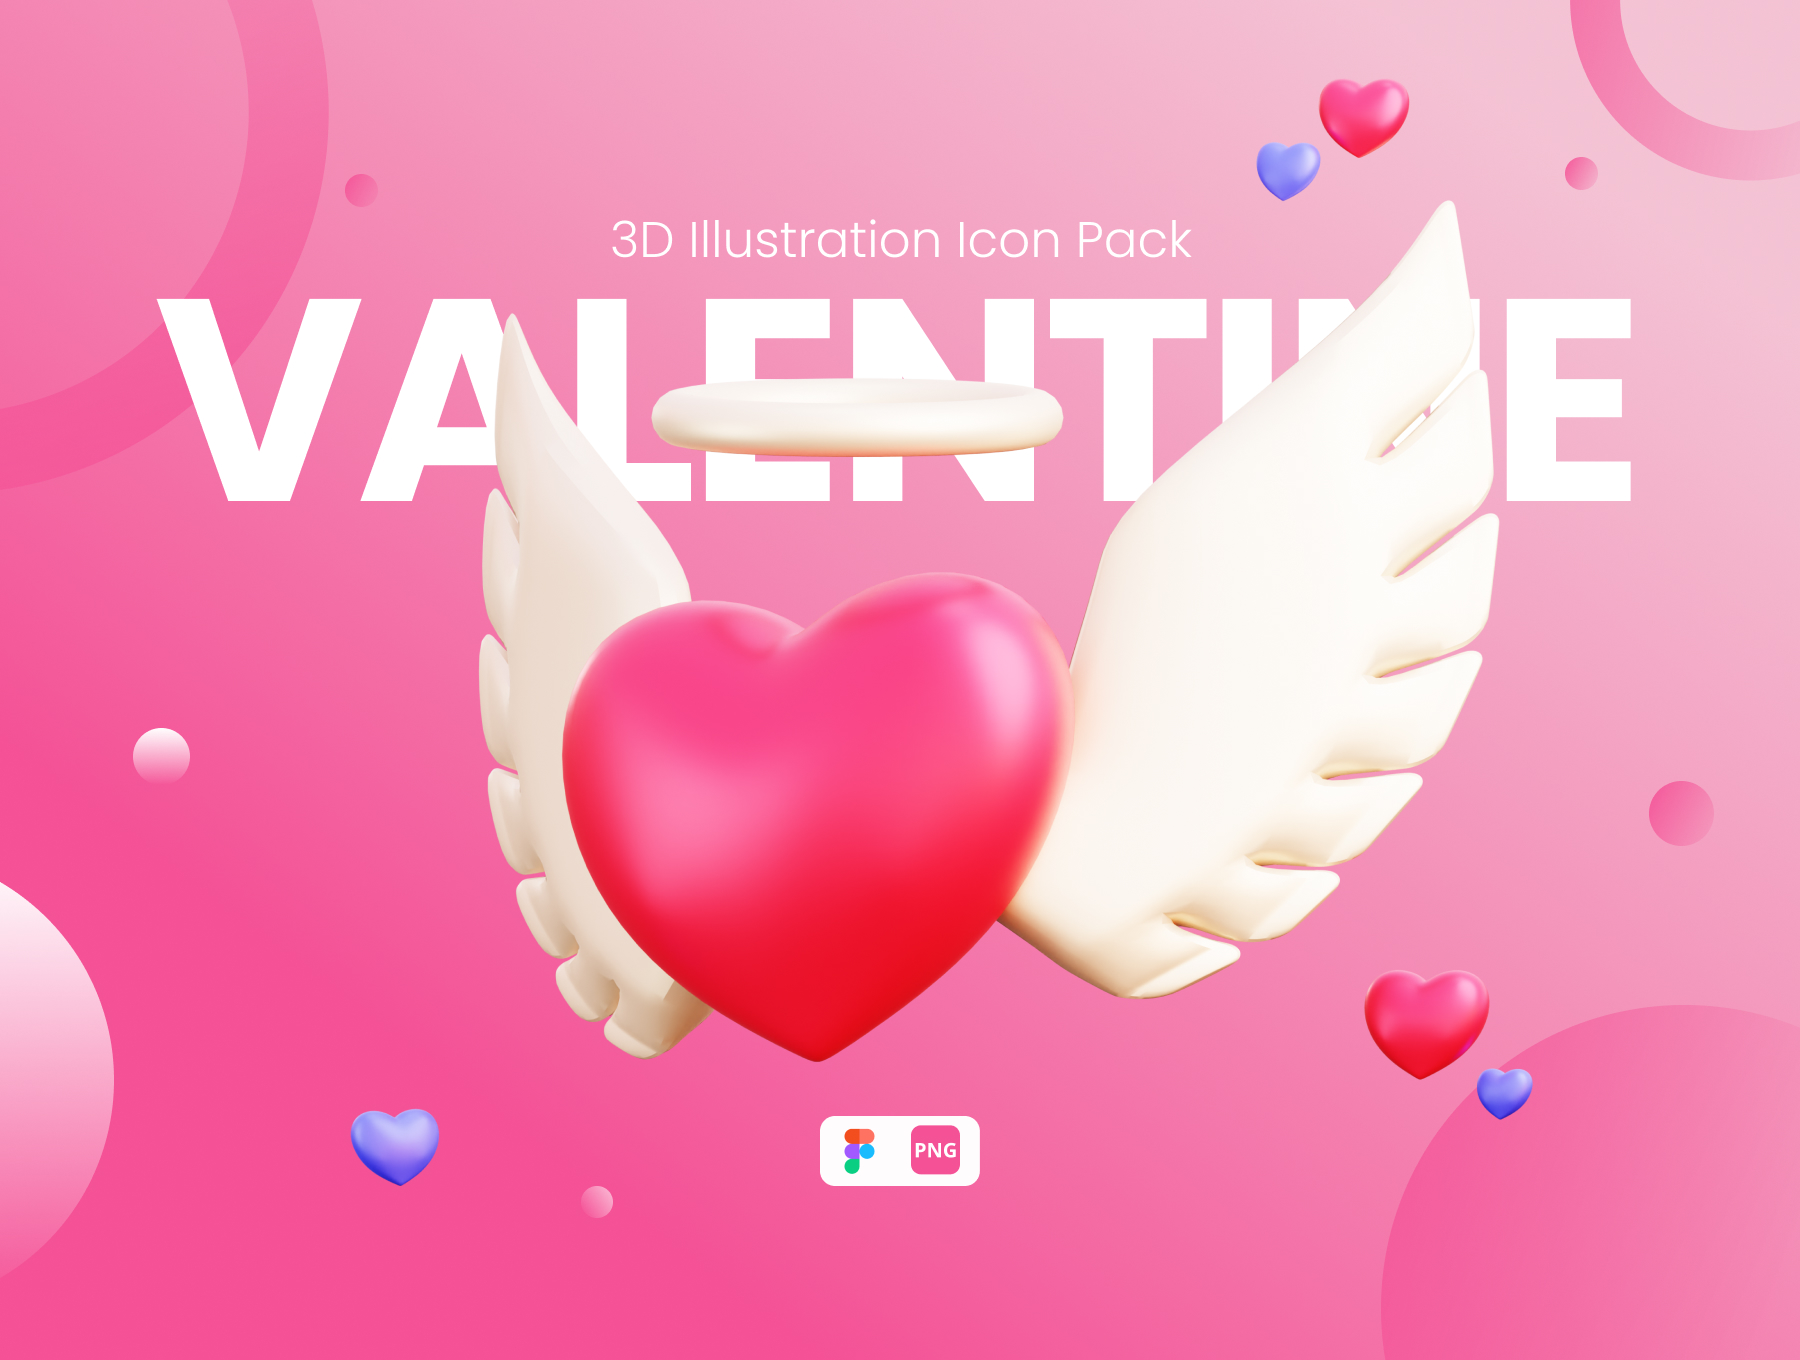 Valentine: 3D Illustration Icon Pack